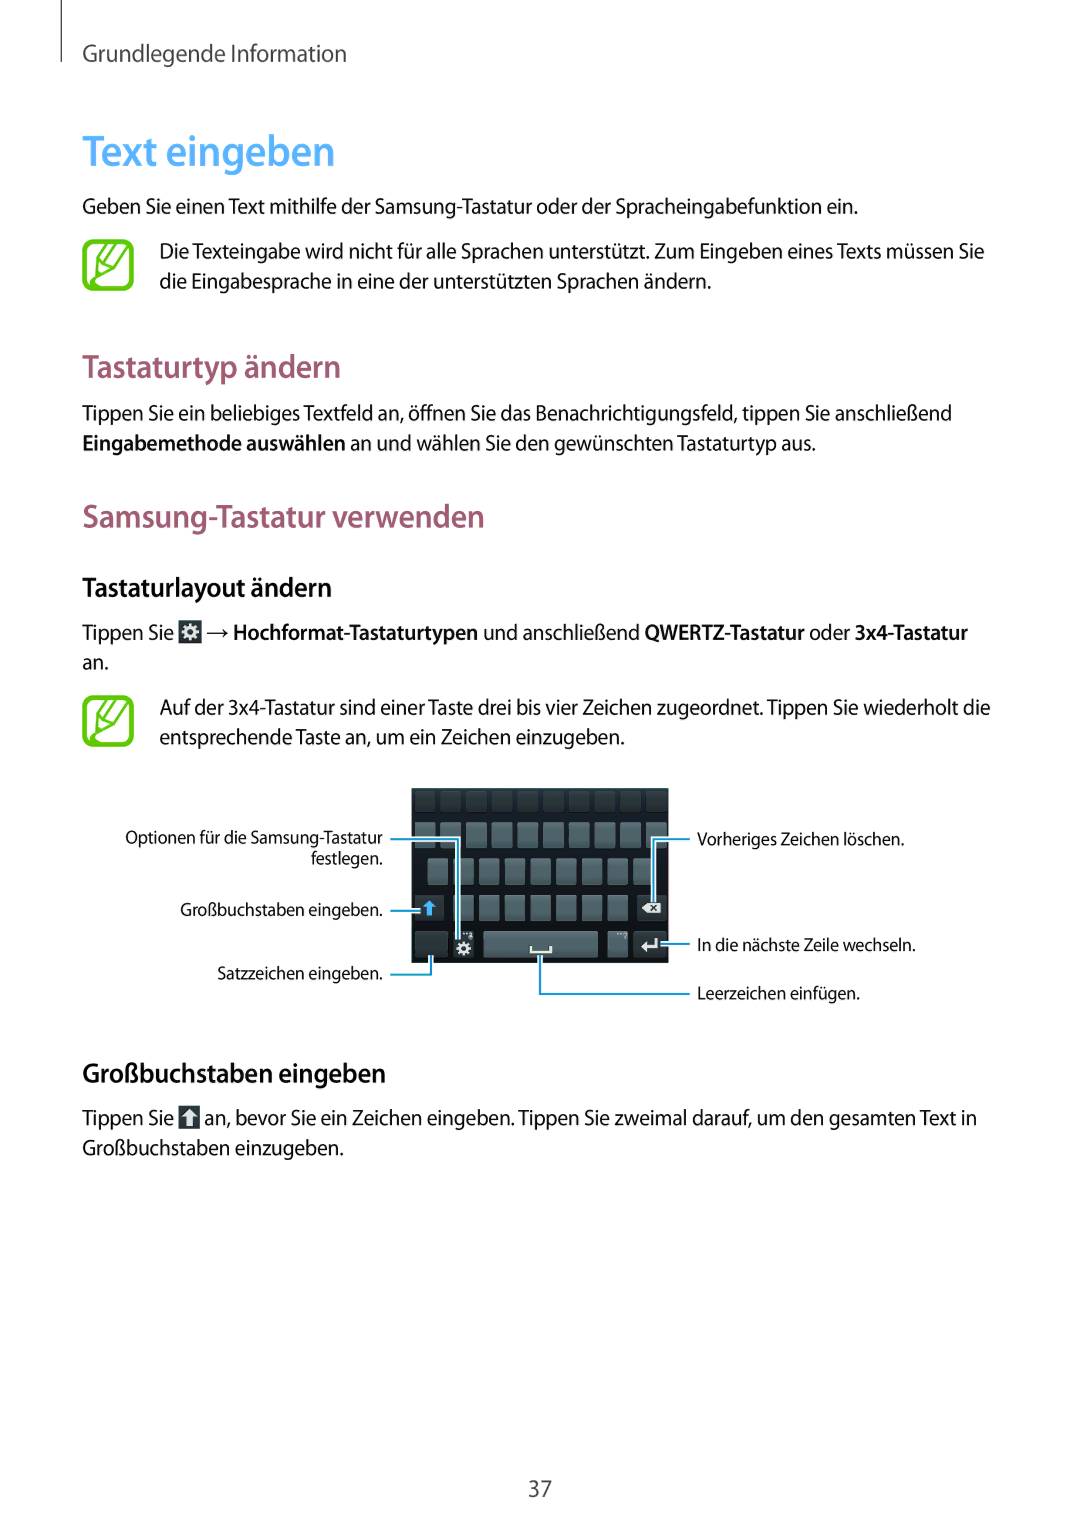 Samsung GT-I9205ZKAVD2 manual Text eingeben, Tastaturtyp ändern, Samsung-Tastatur verwenden, Tastaturlayout ändern 